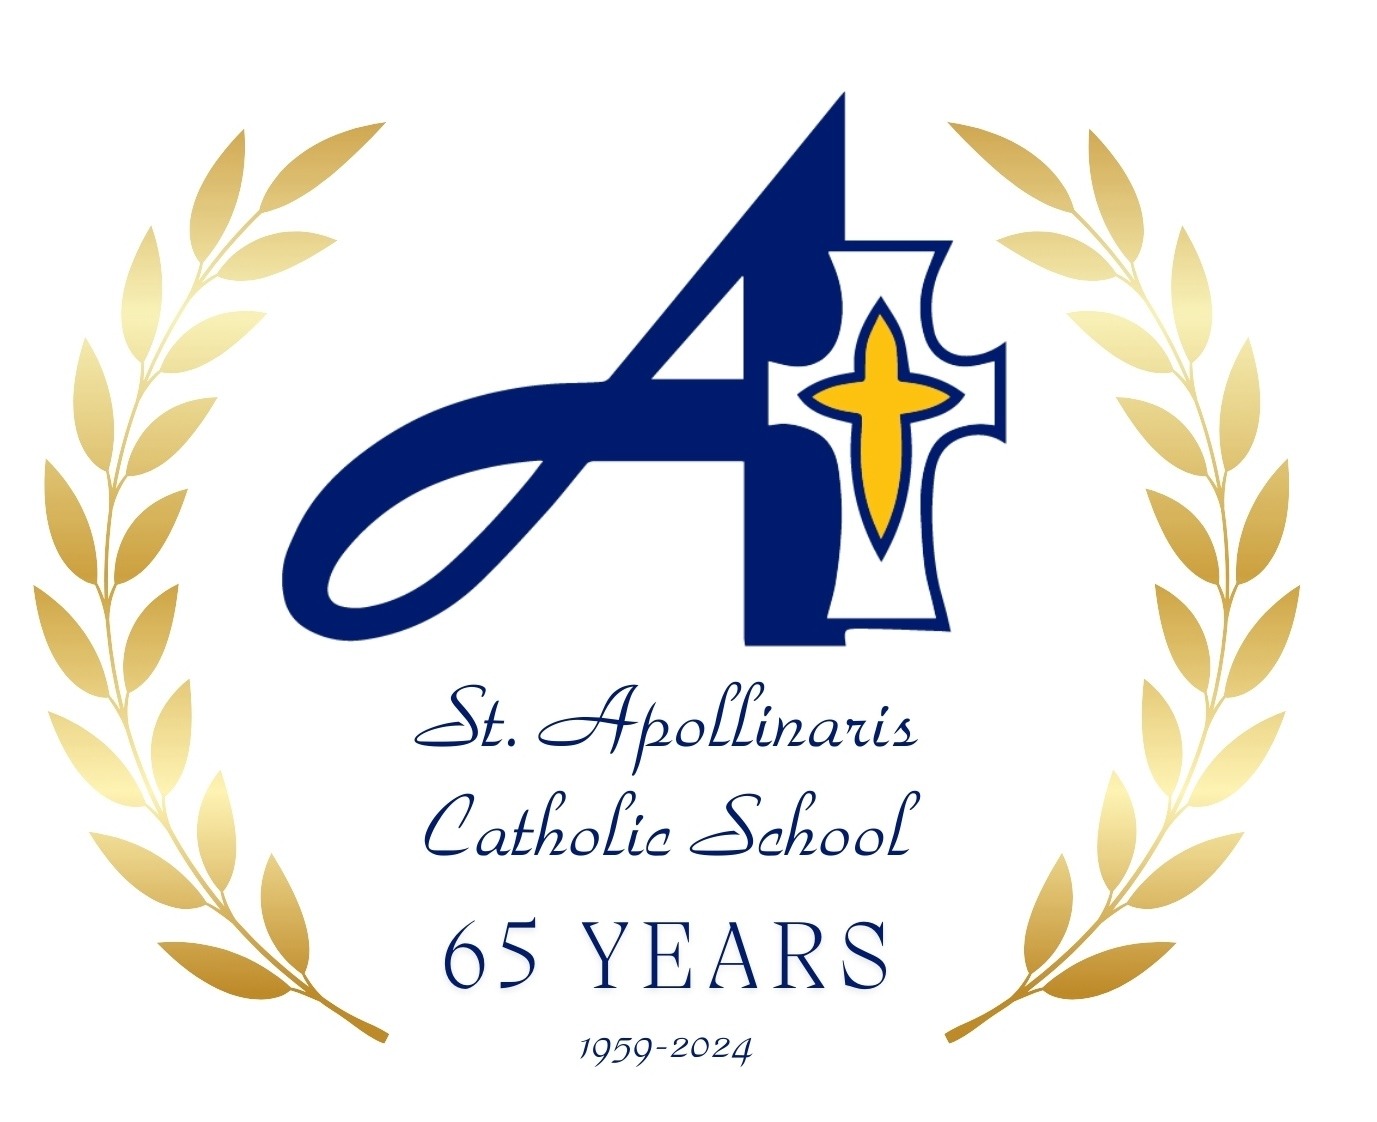 St. Apollinaris Catholic School